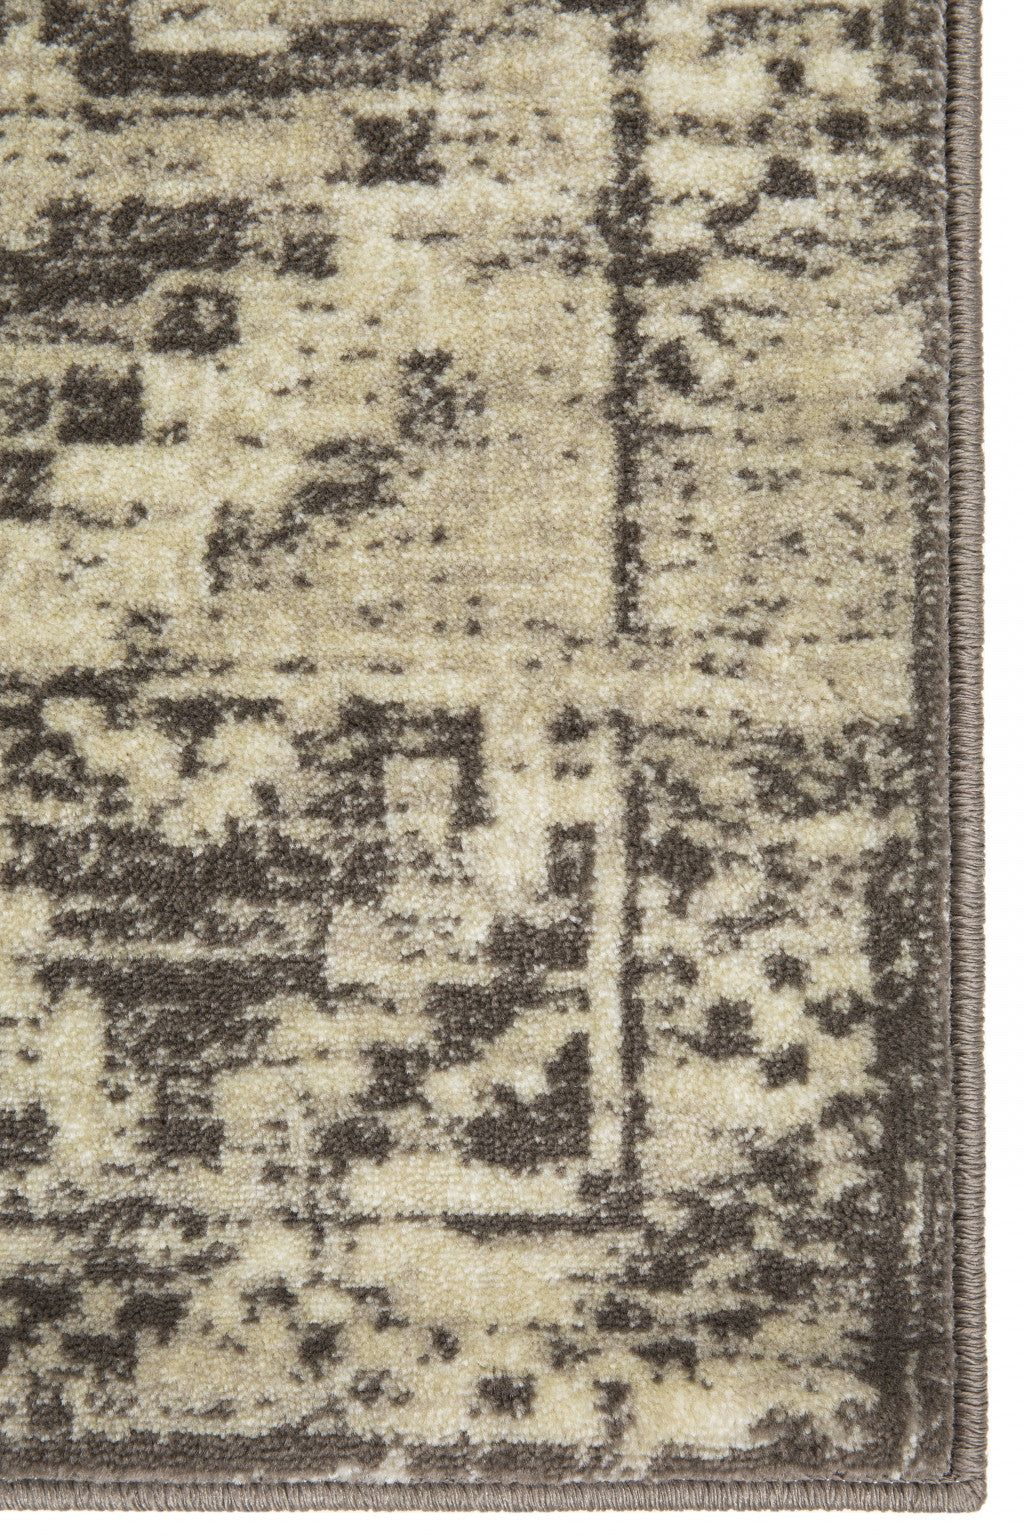 5' x 8' Gray Abstract Area Rug